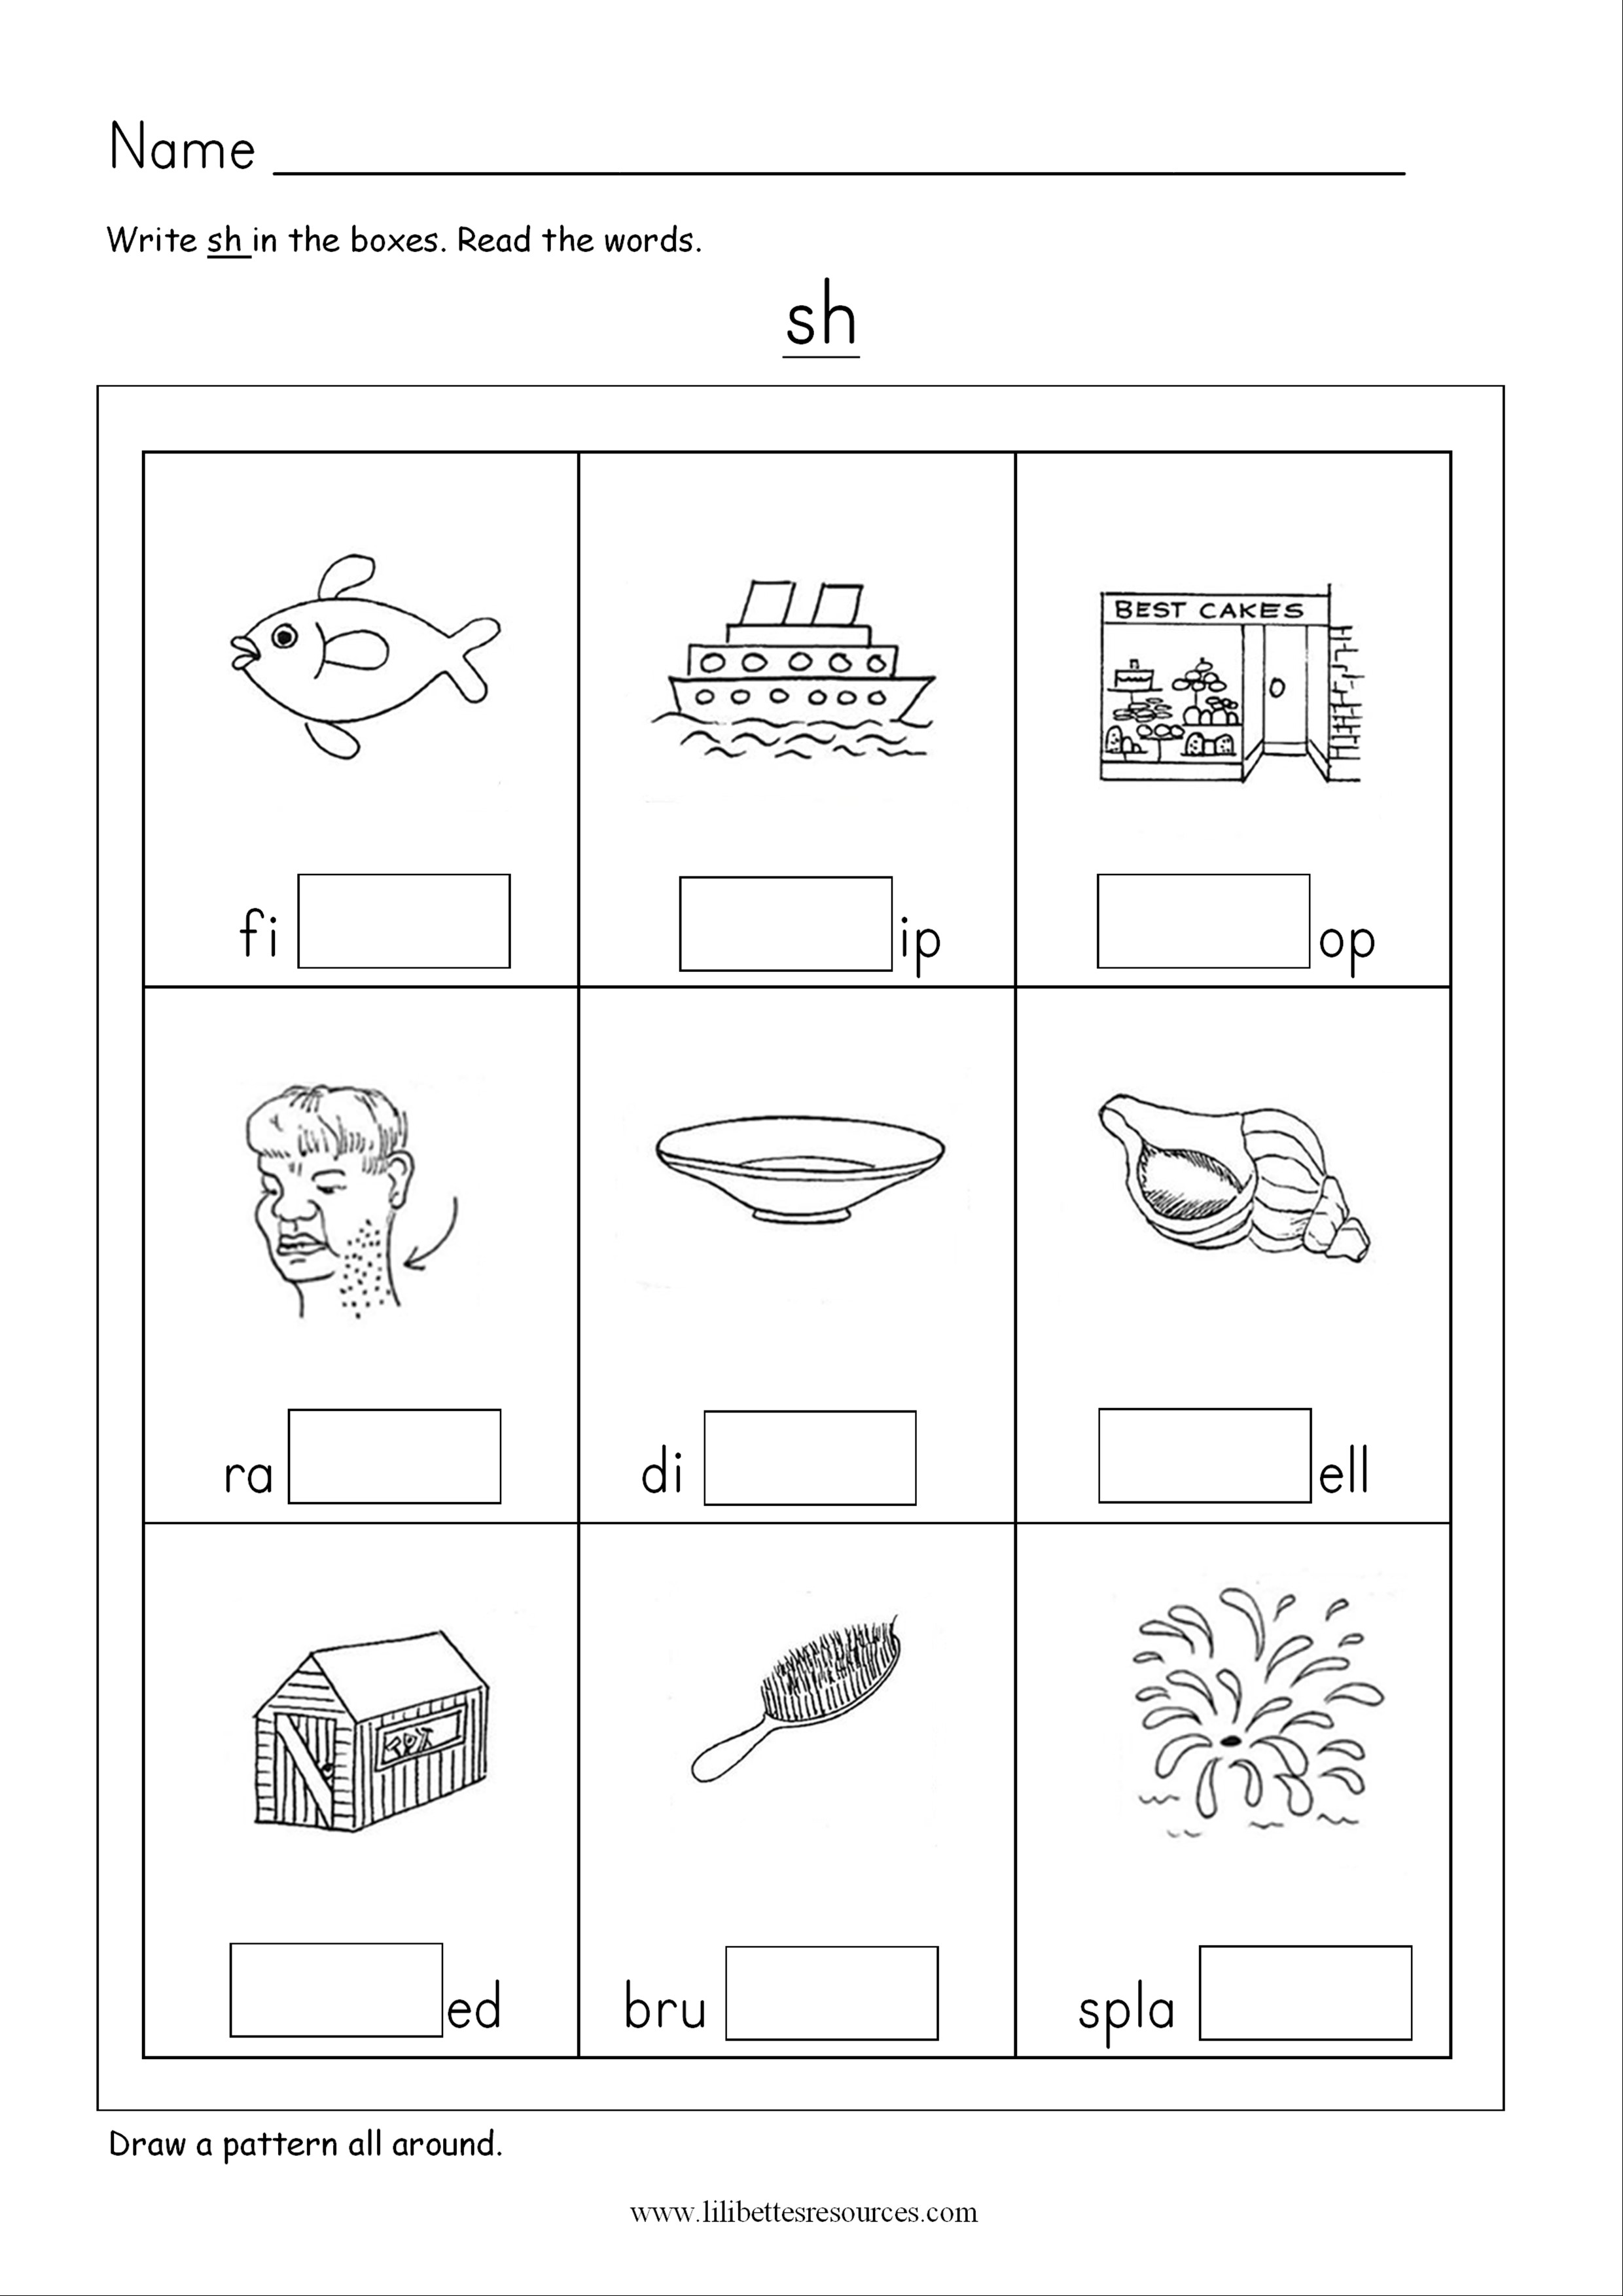 Sh Words Worksheet For Grade 1 Kidsworksheetfun - vrogue.co